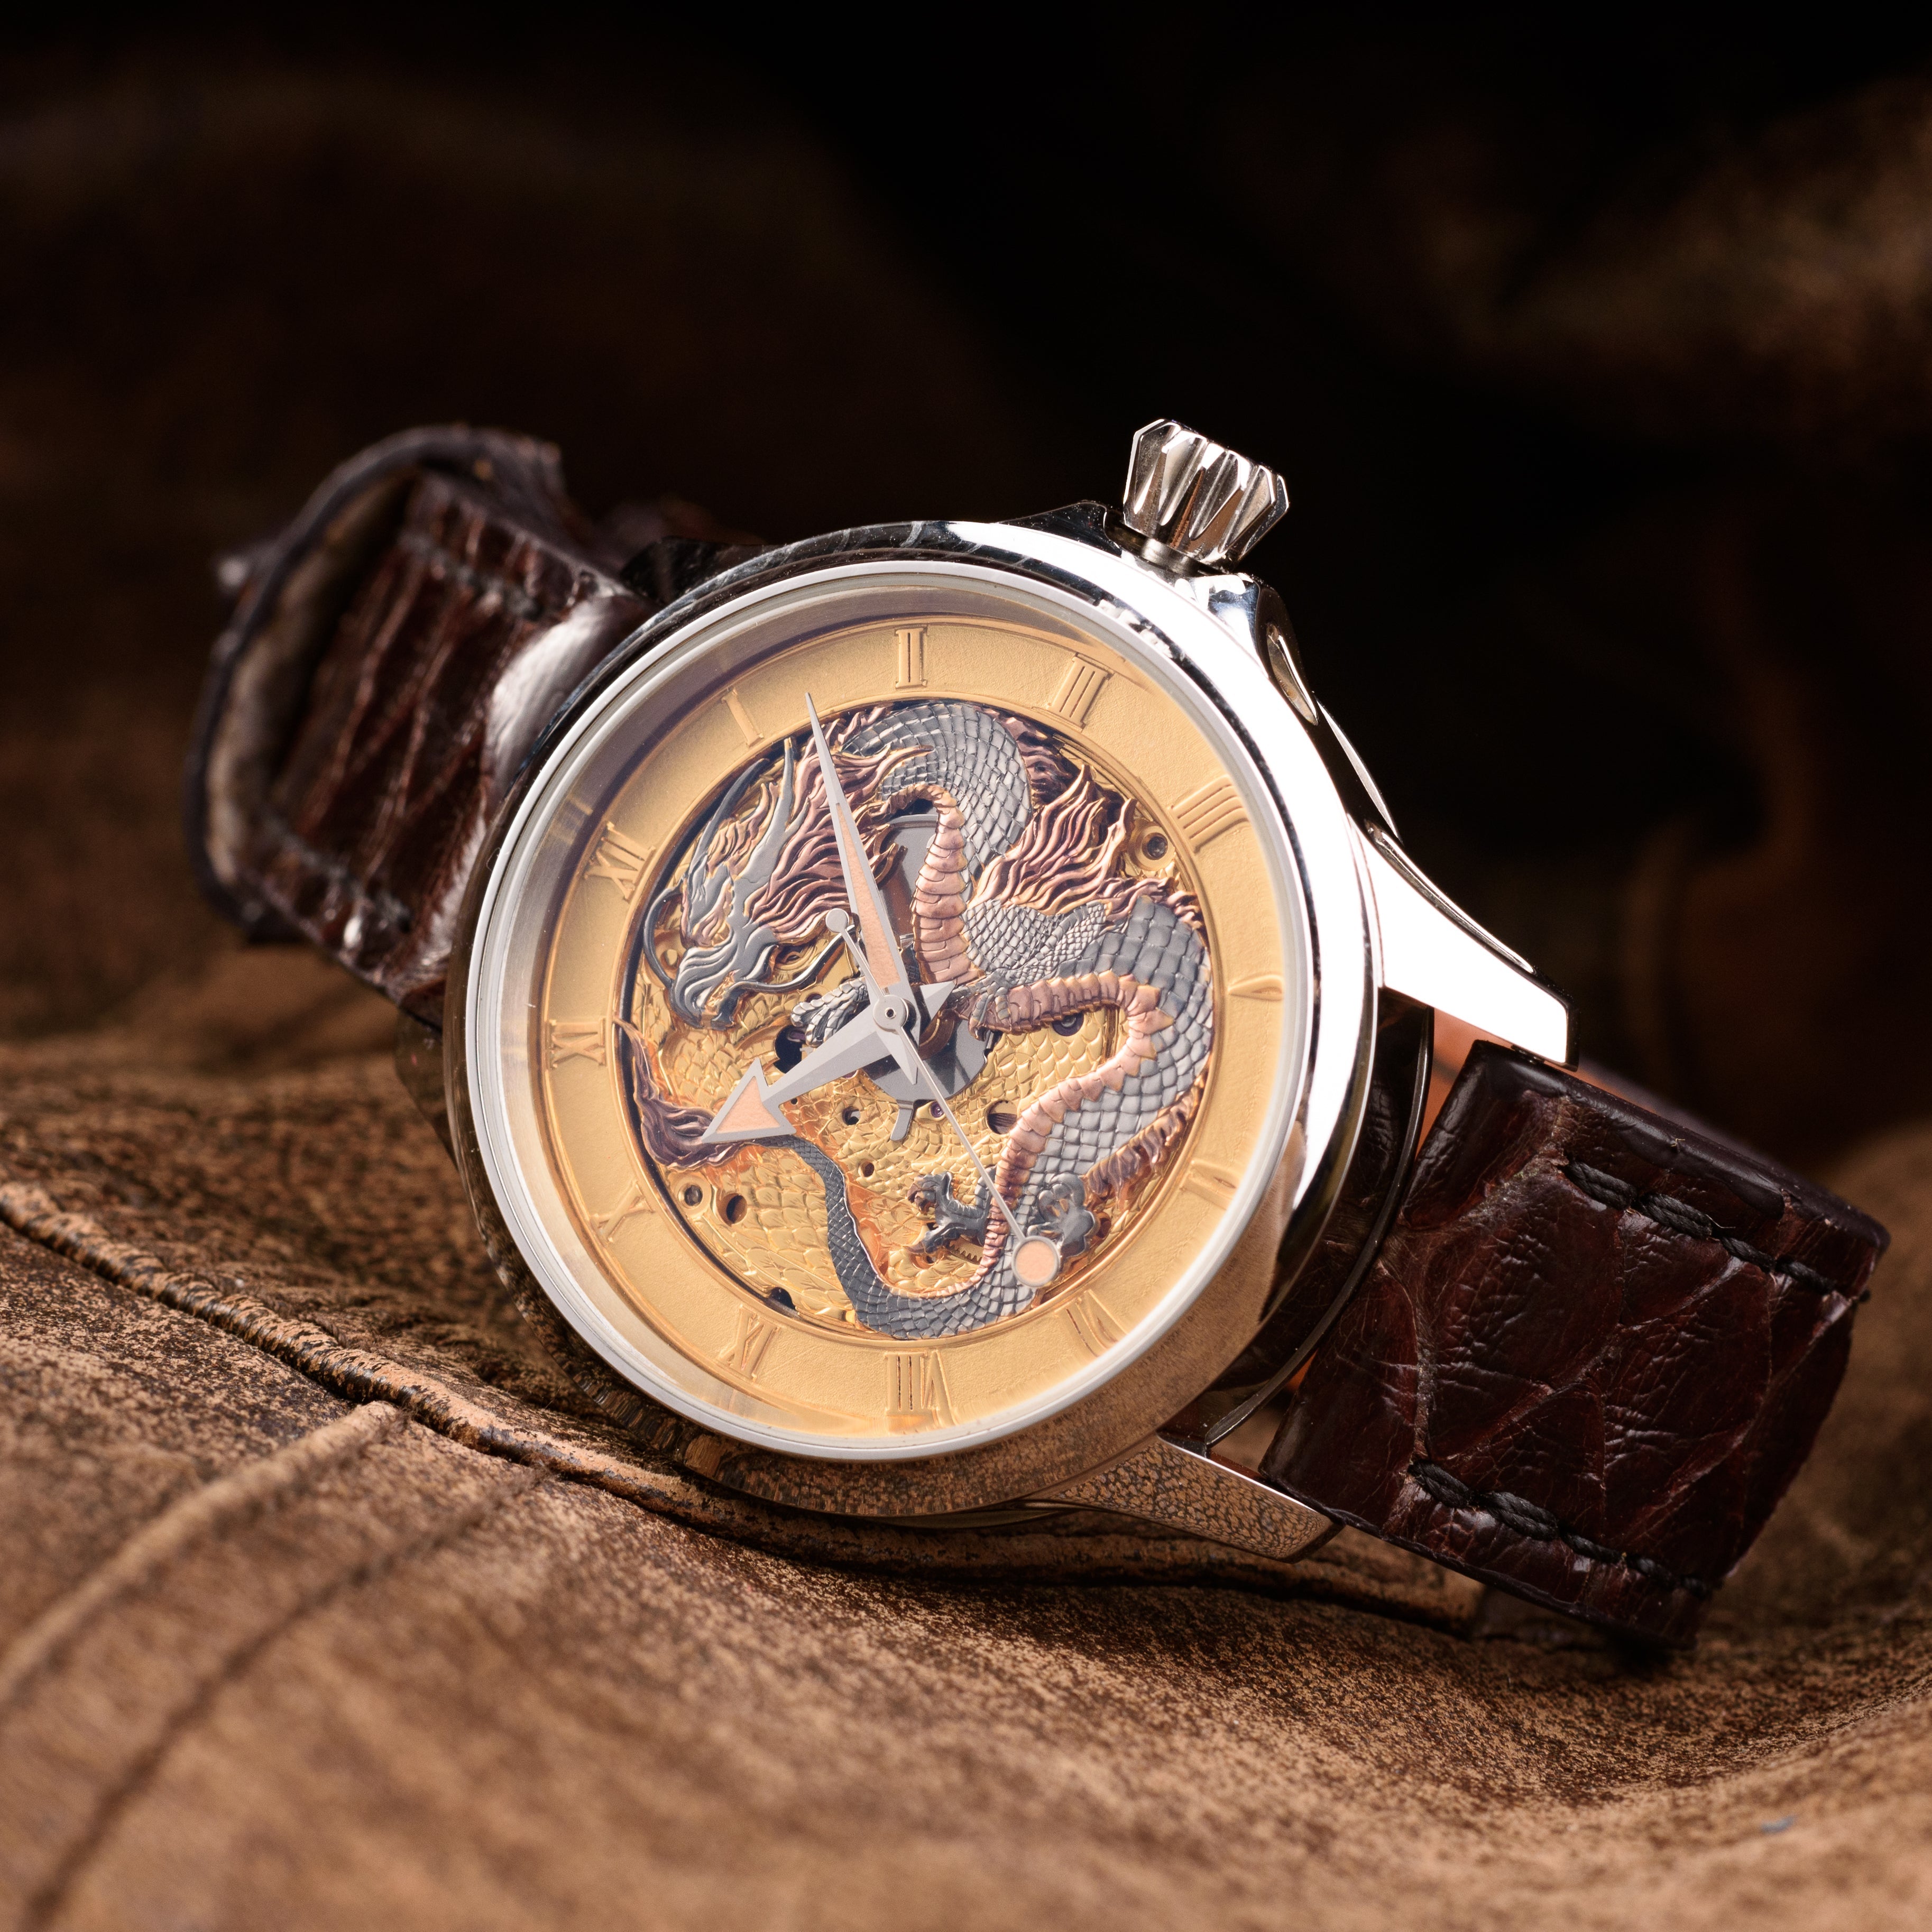 Mole custom watch, Model: Dragon V2, Movement: ETA 2824